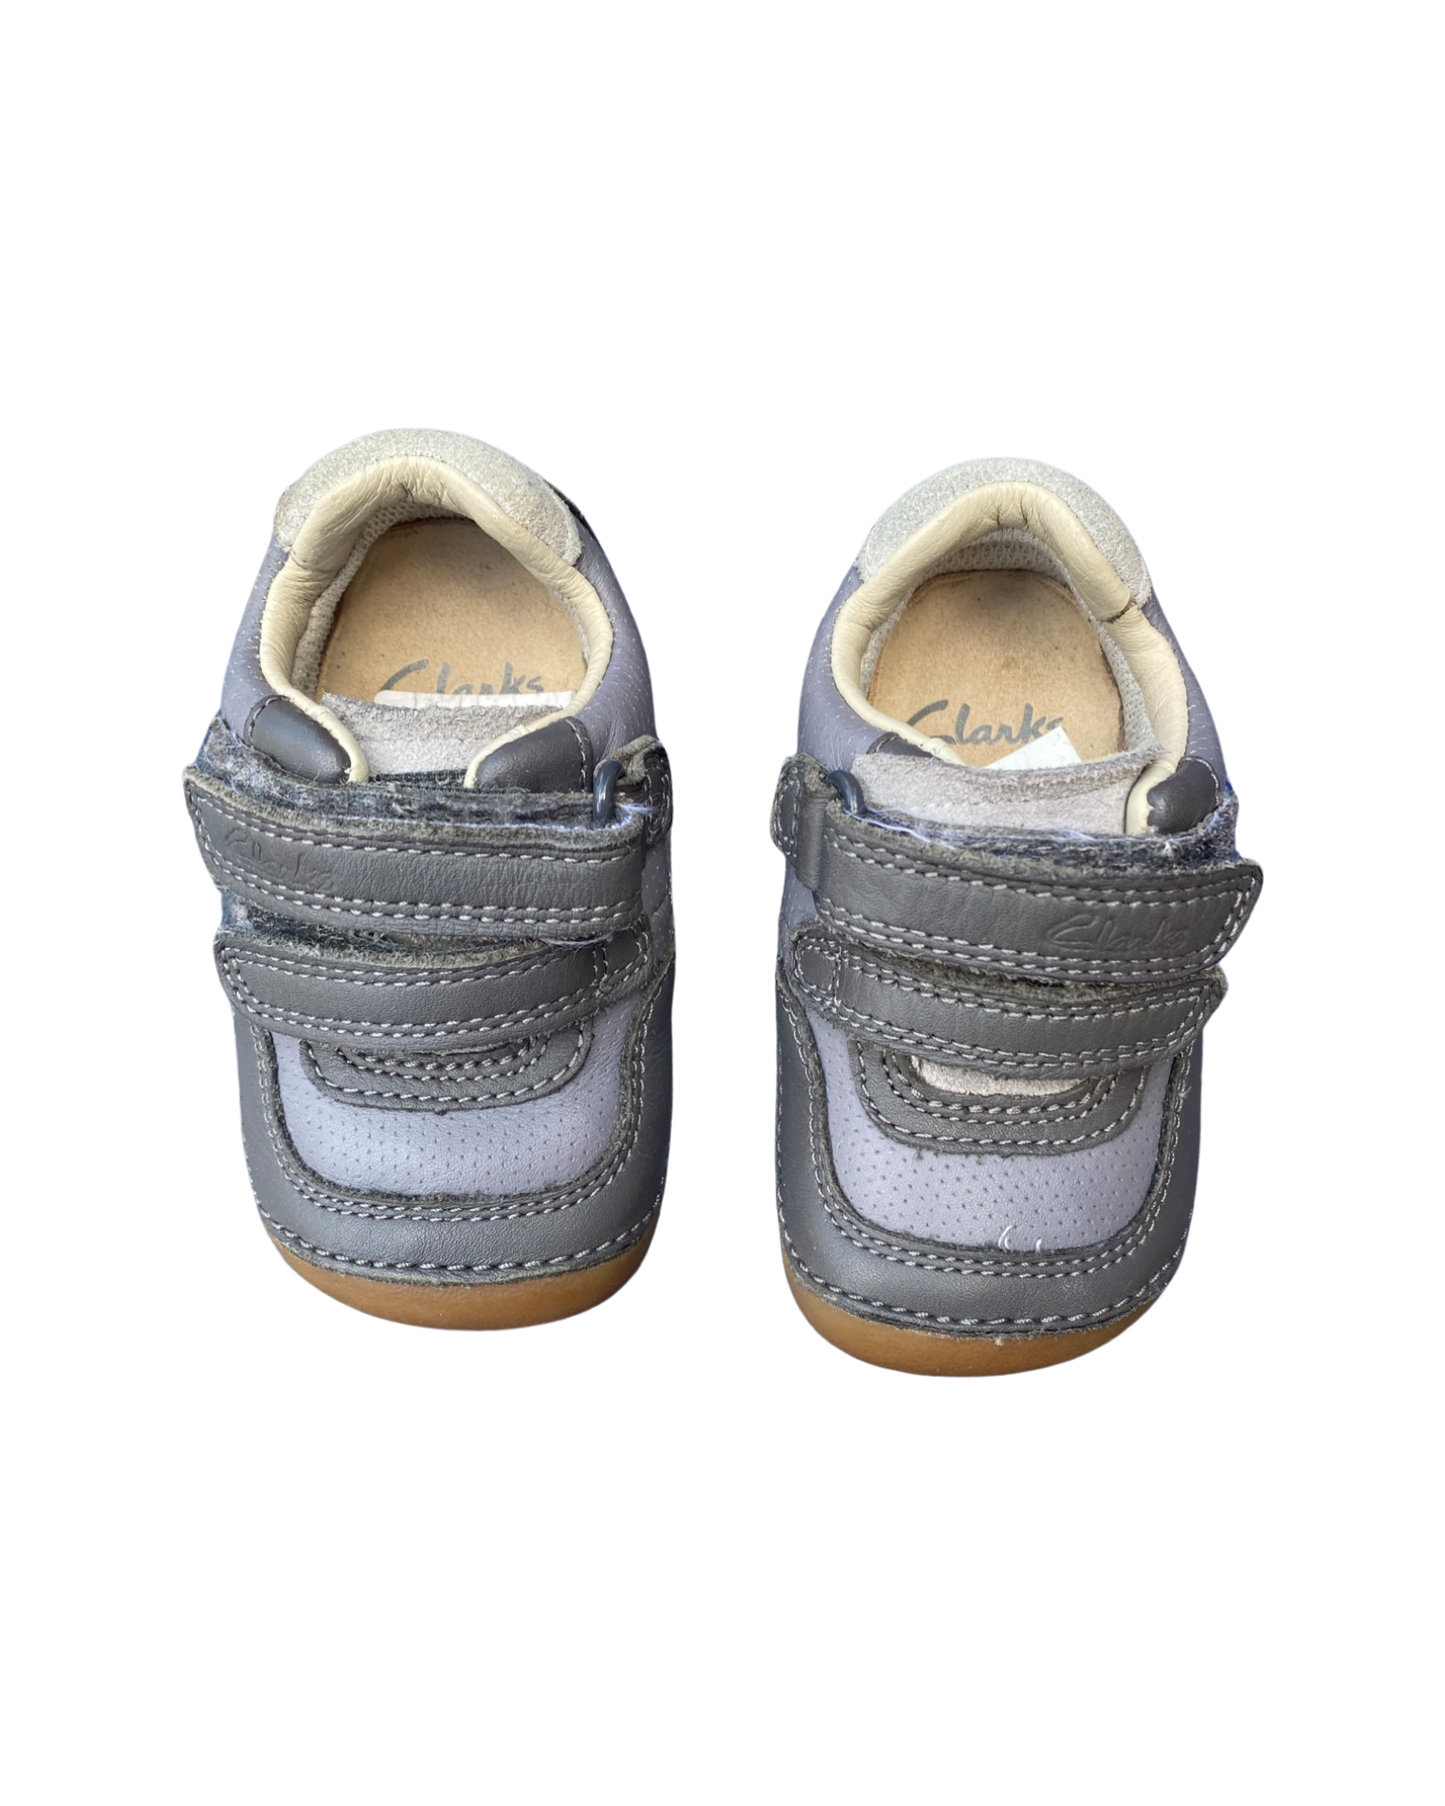 Clarks Tiny Sky first walker shoes (suze EU19/UK3F)